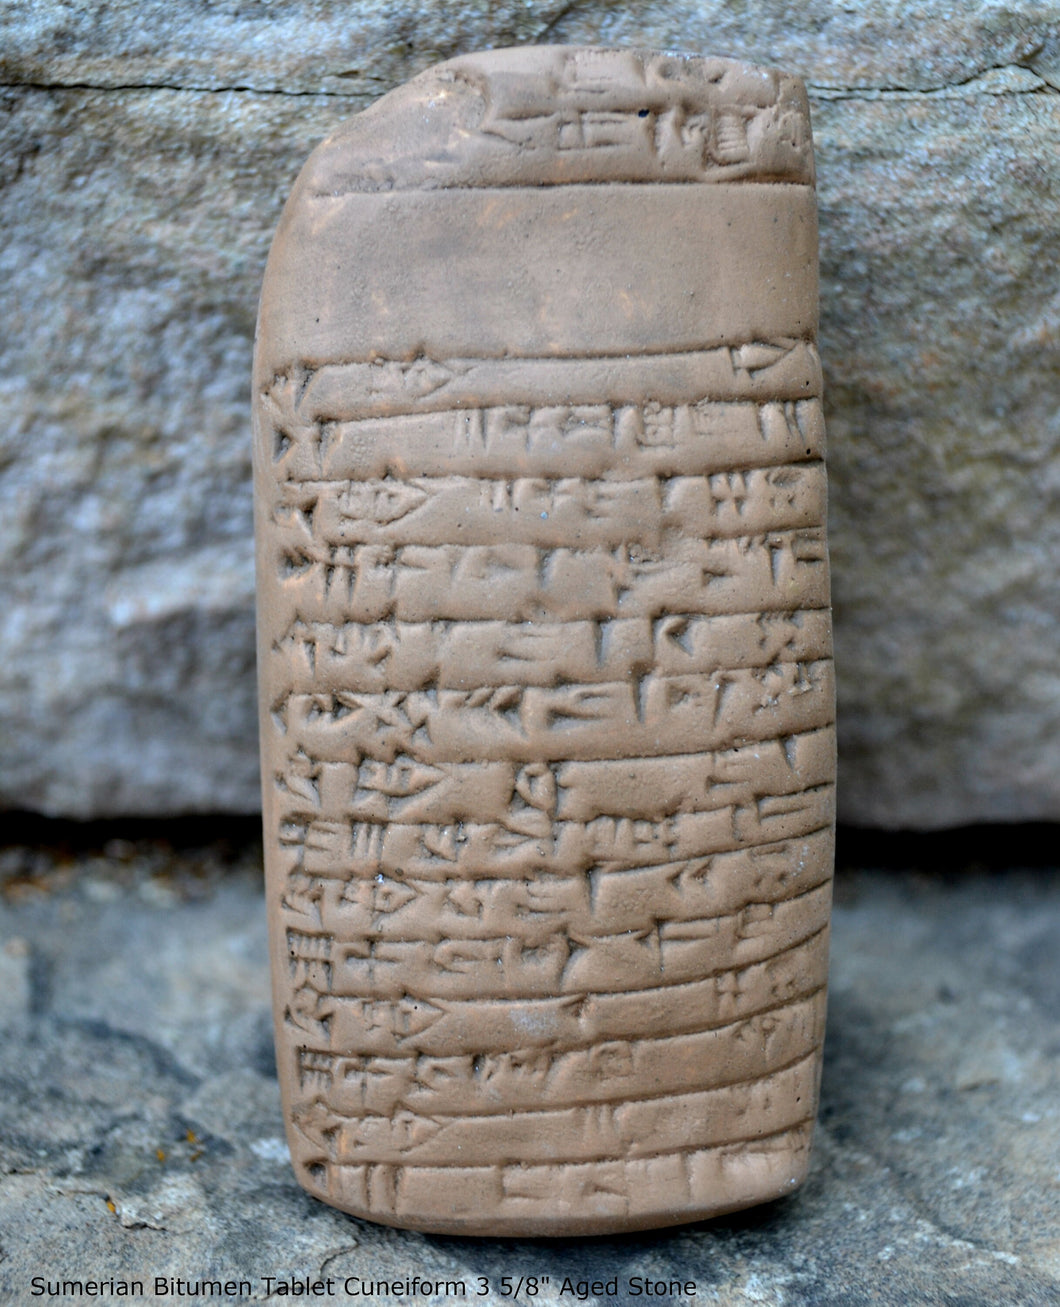 Sumerian Bitumen Tablet Cuneiform Sculptural www.Neo-Mfg.com museum reproduction 3 5/8